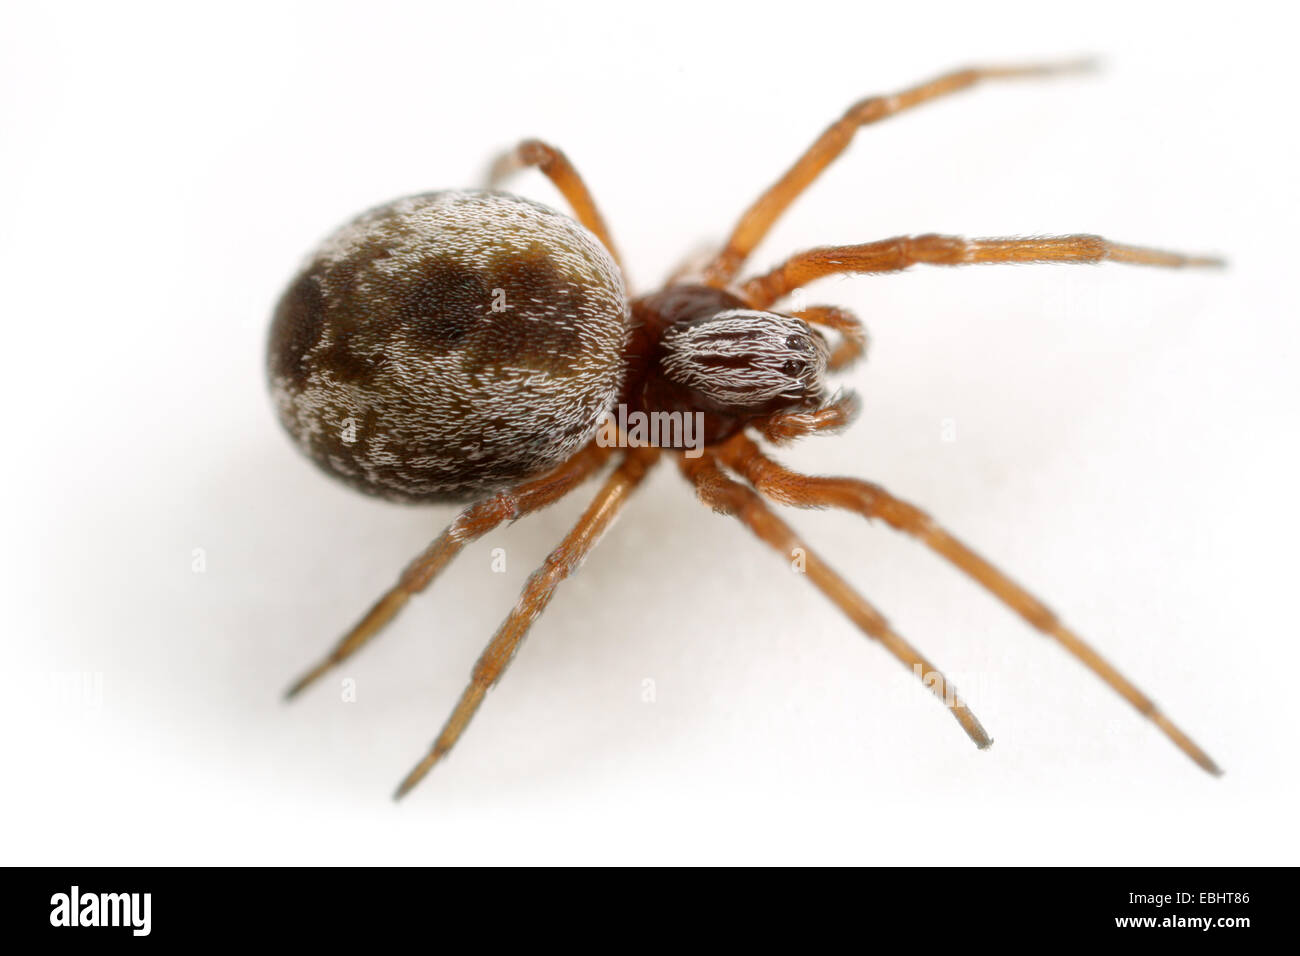 Femmina Dictyna arundinacea spider su sfondo bianco. Famiglia Dictynidae, Meshweb tessitori. Foto Stock